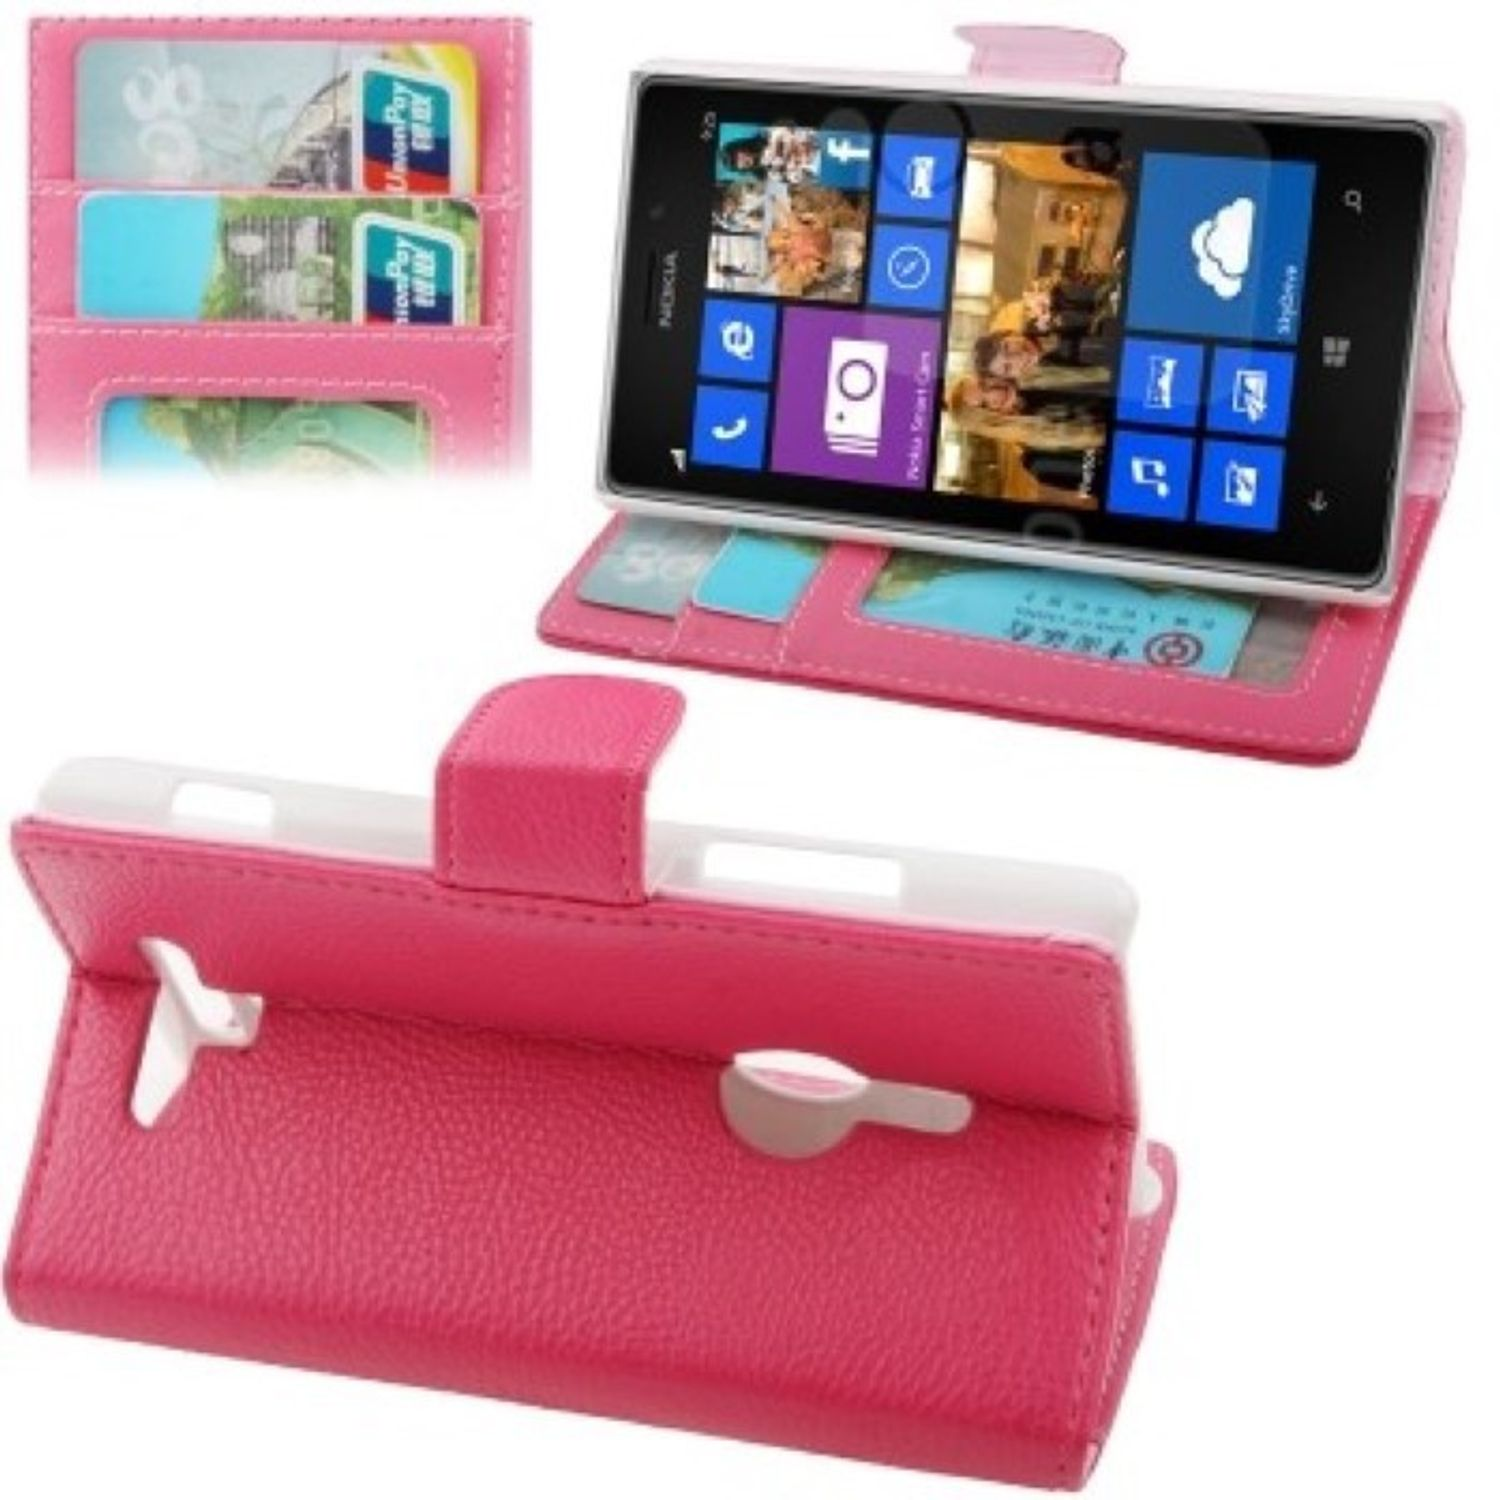 Rosa Nokia, Lumia DESIGN KÖNIG 925, Backcover, Handyhülle,